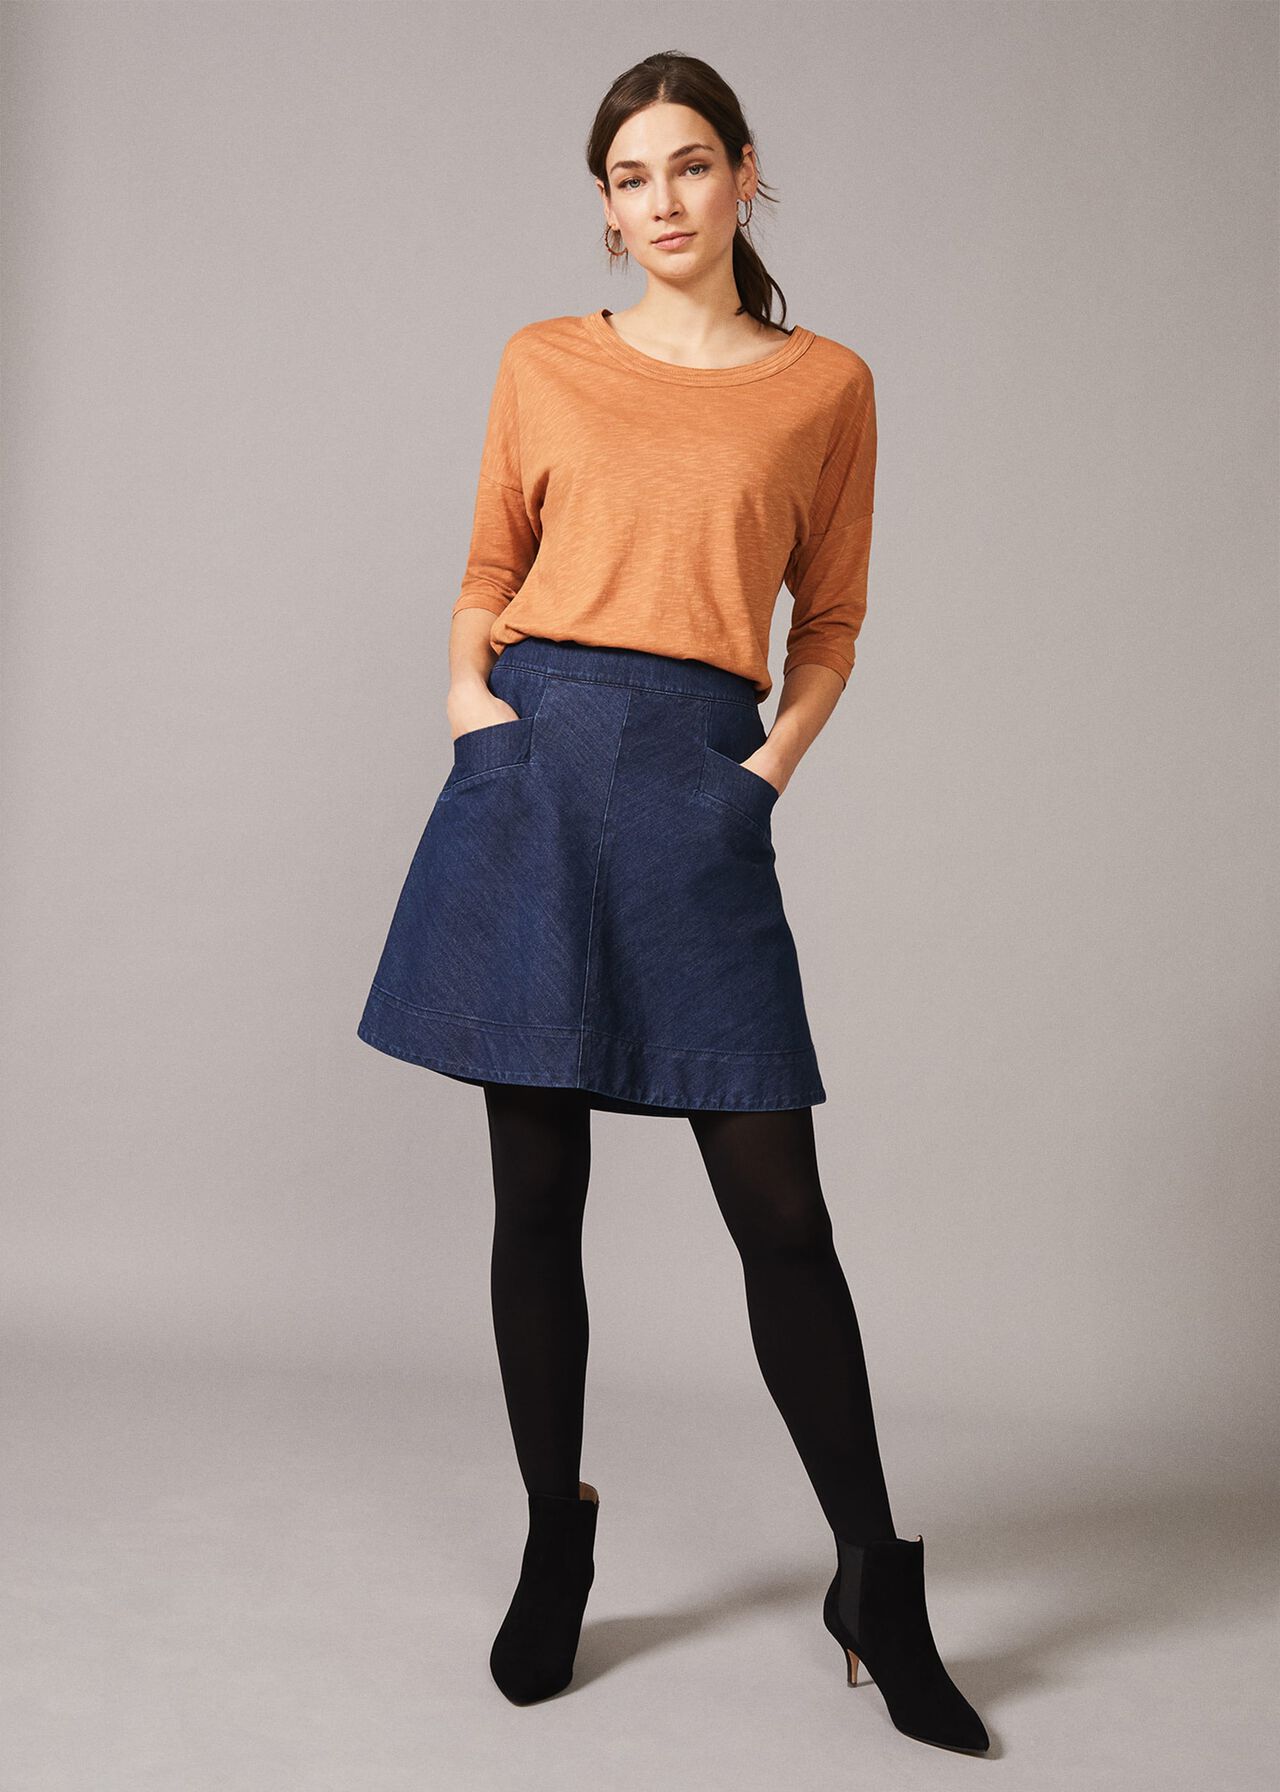 Inkiri A-Line Denim Skirt